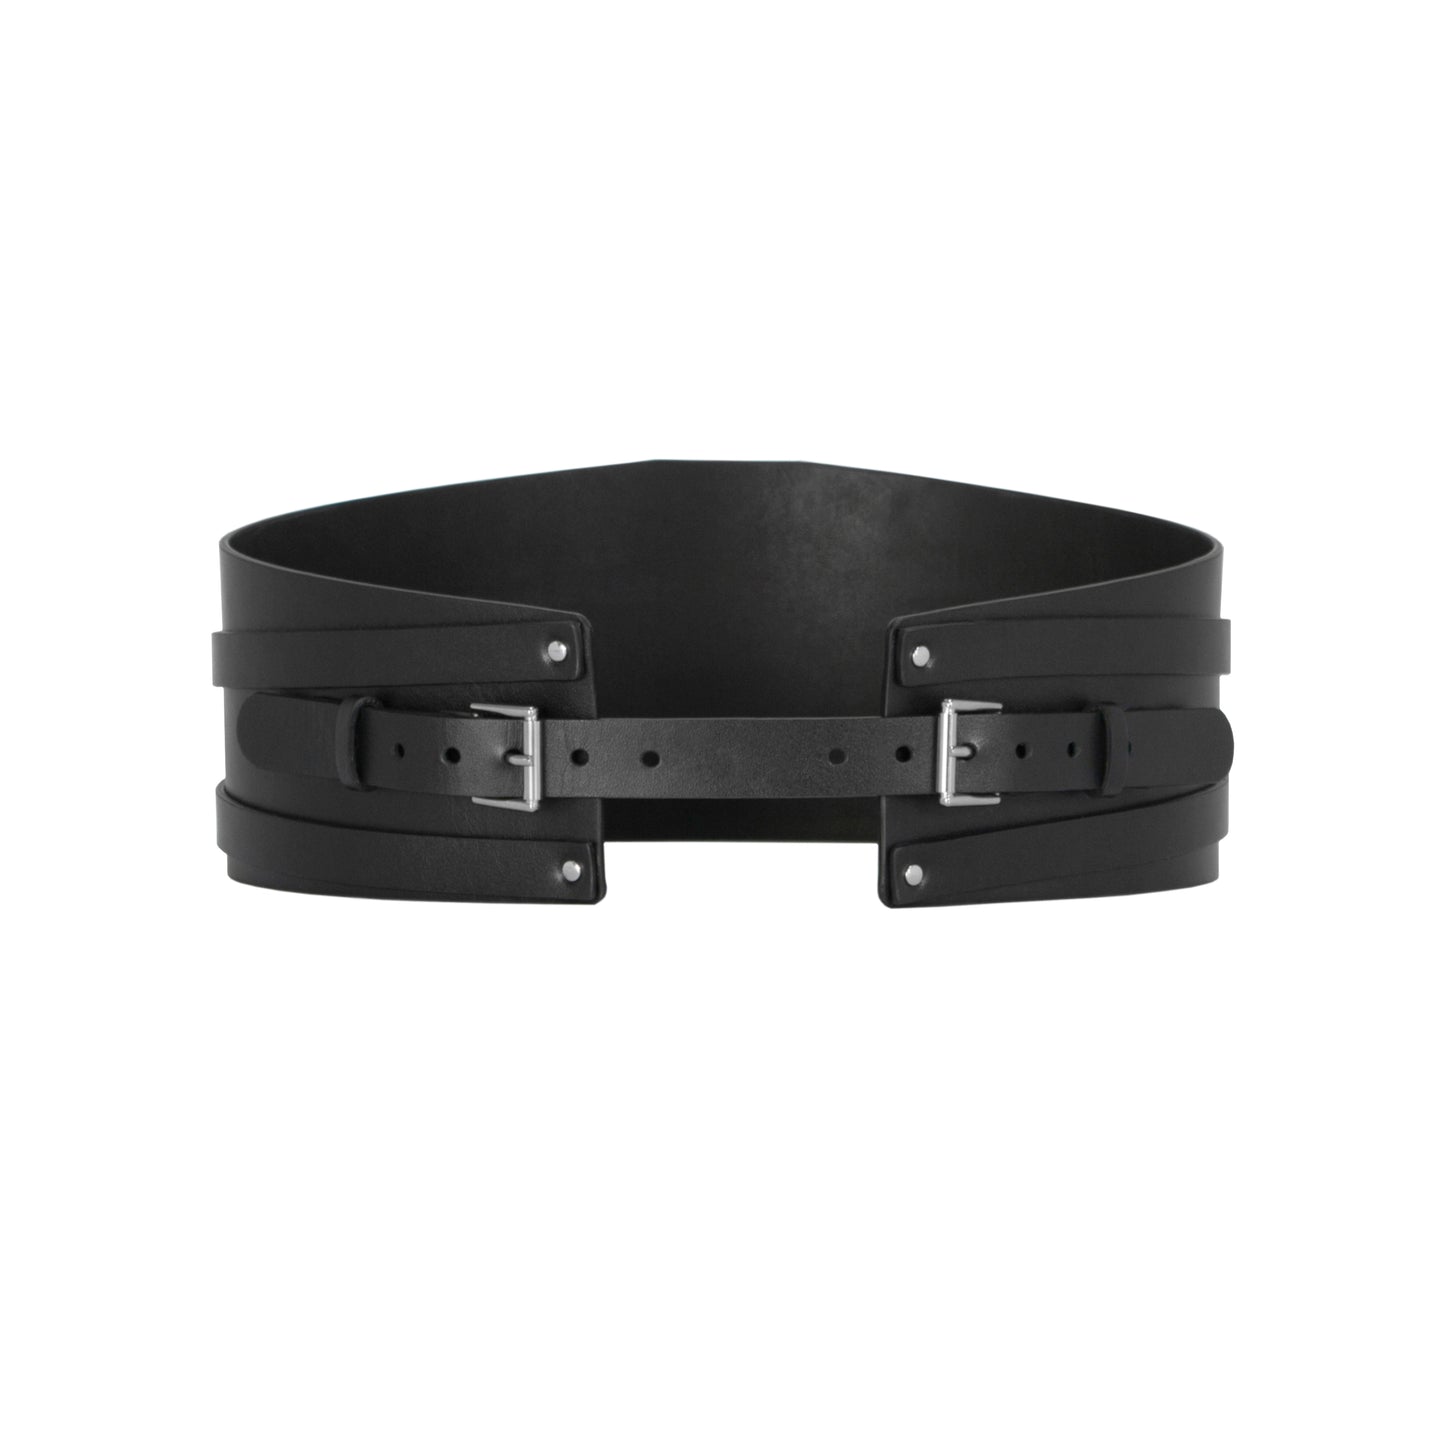 Back view of black leather wide waist belt.